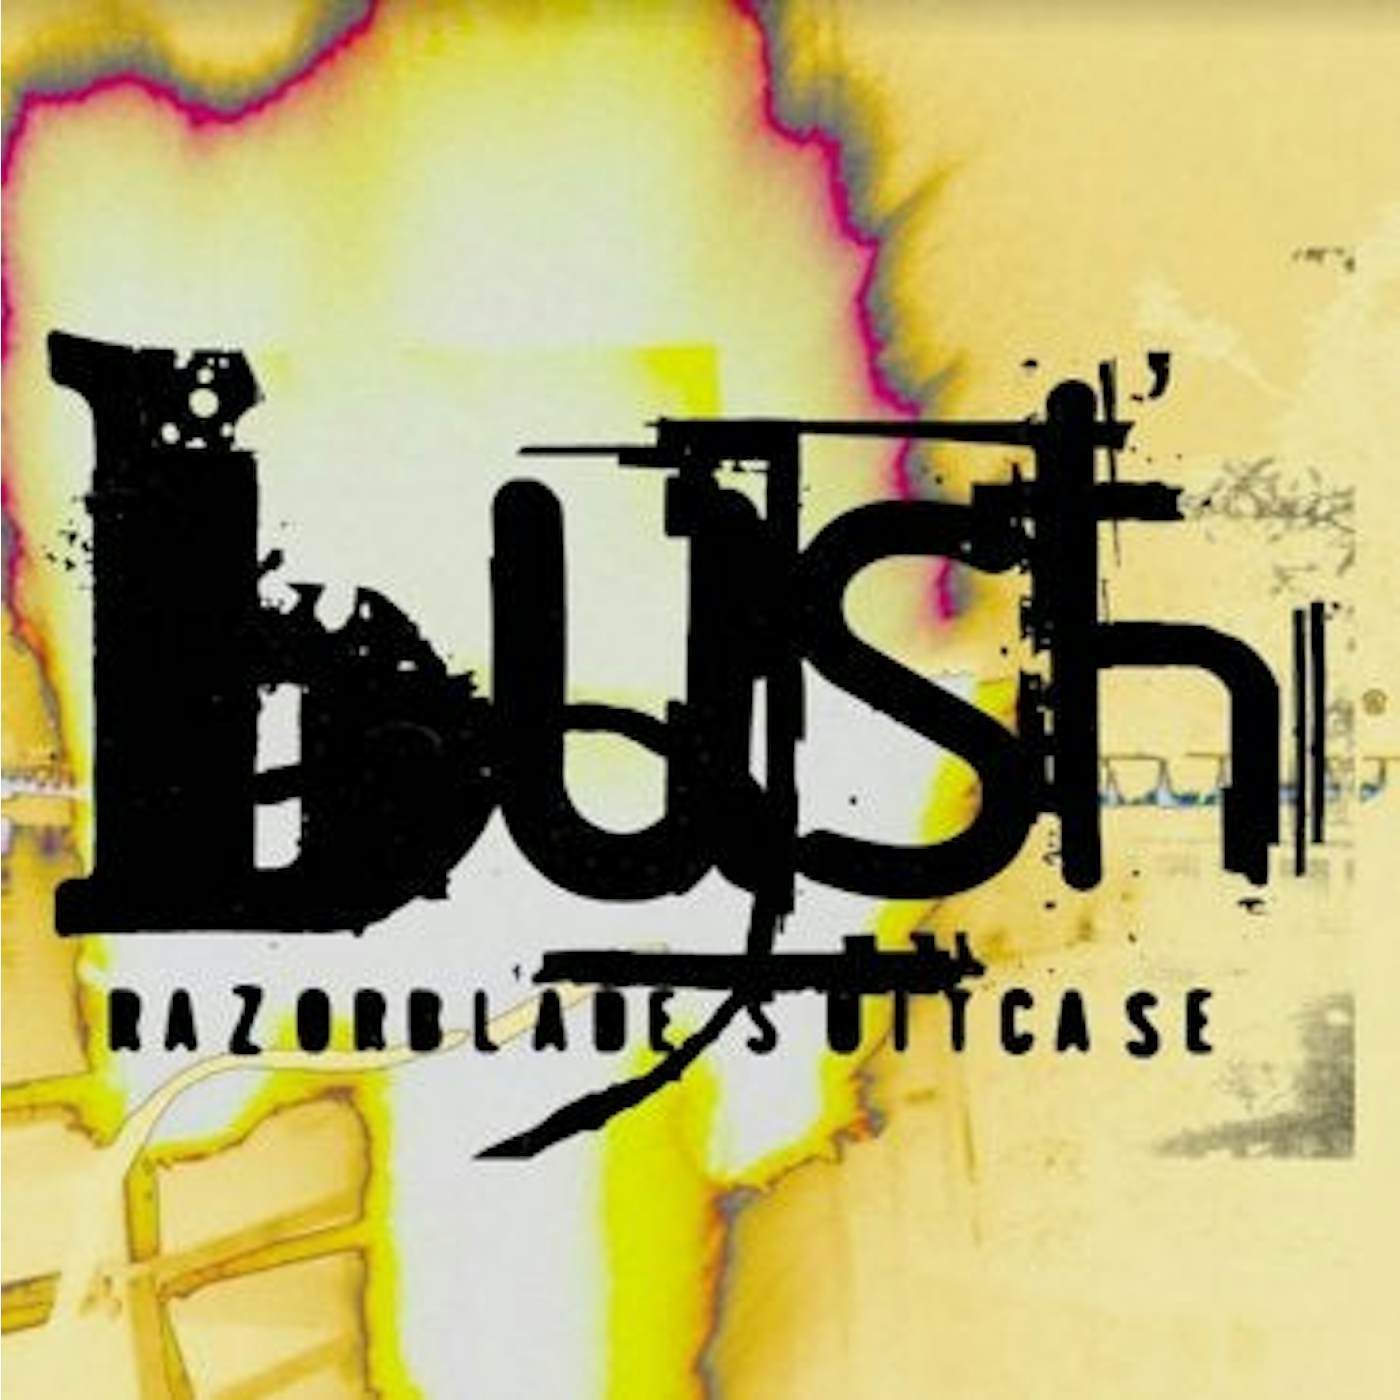 Bush RAZORBLADE SUITCASE (IN ADDITION) (PINK VINYL) (TEN BANDS ONE CAUSE) Vinyl Record